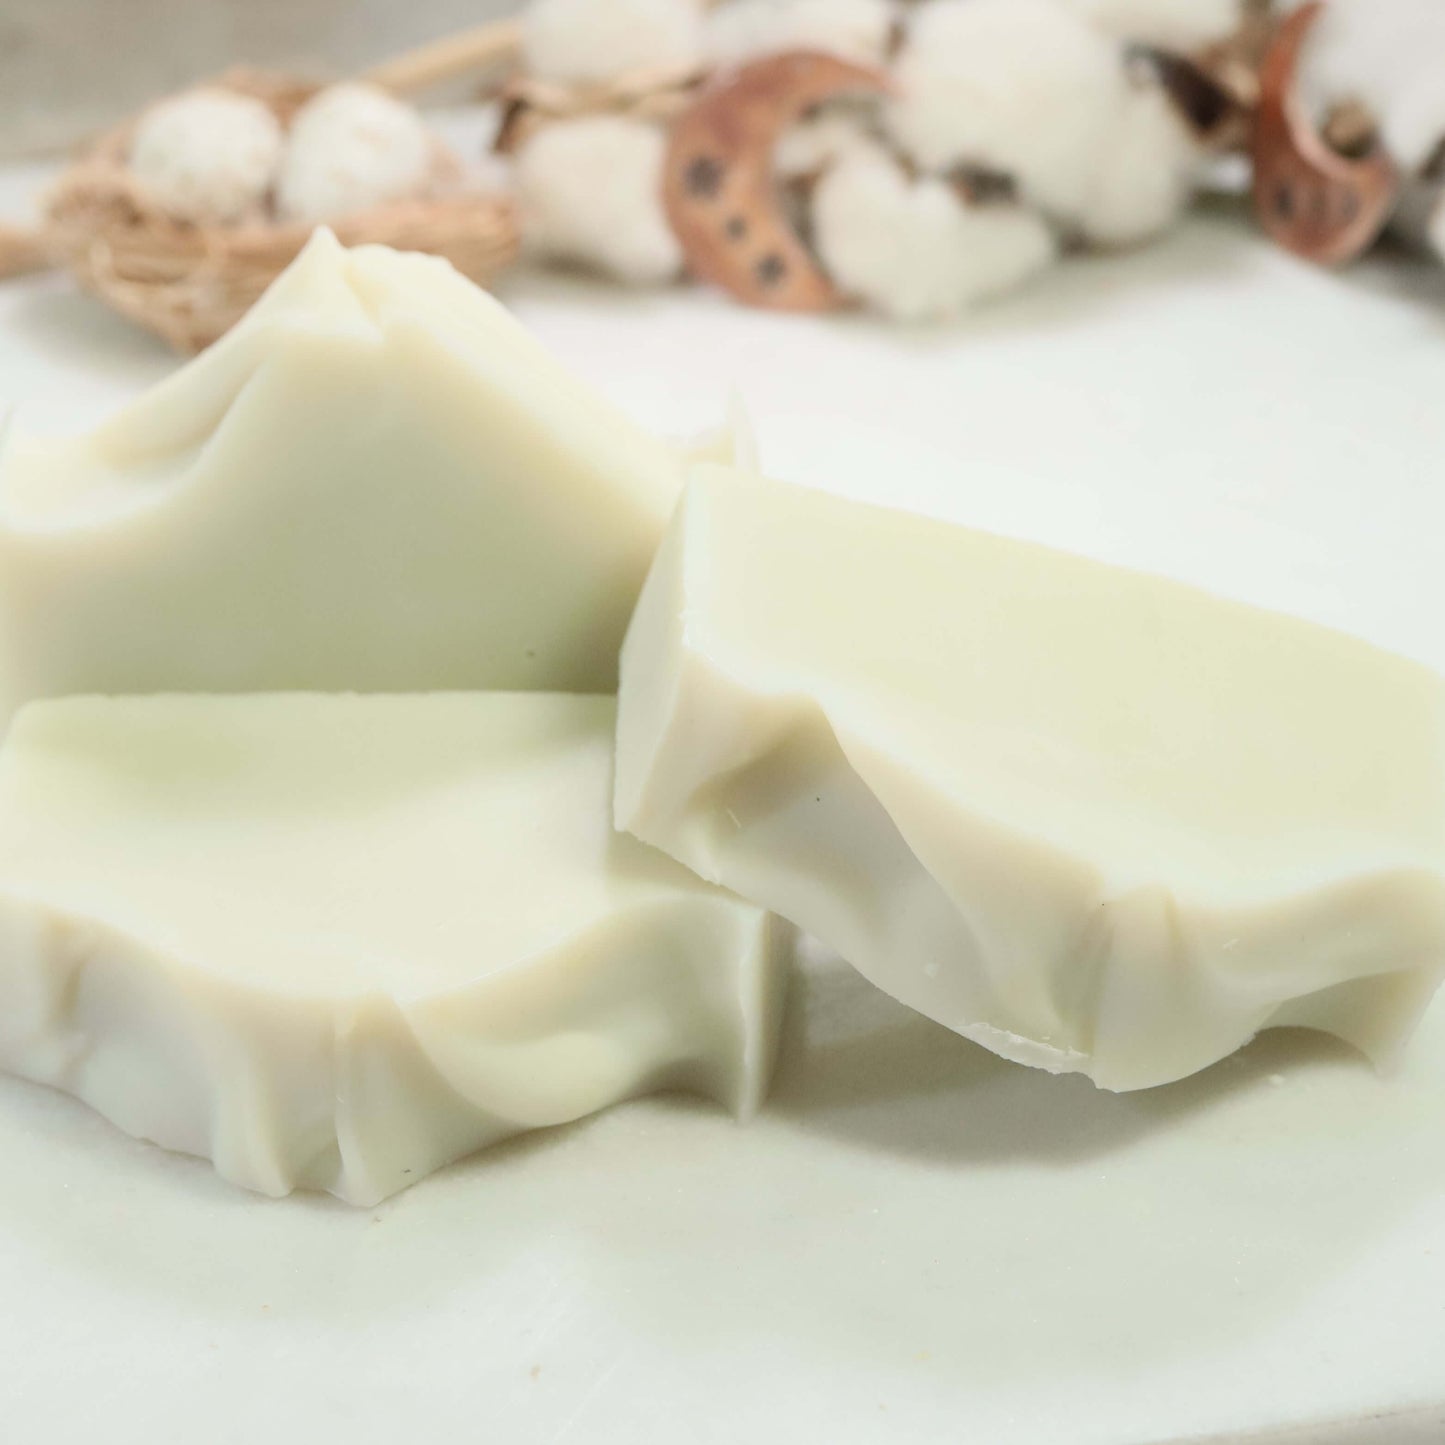 shea butter soap group